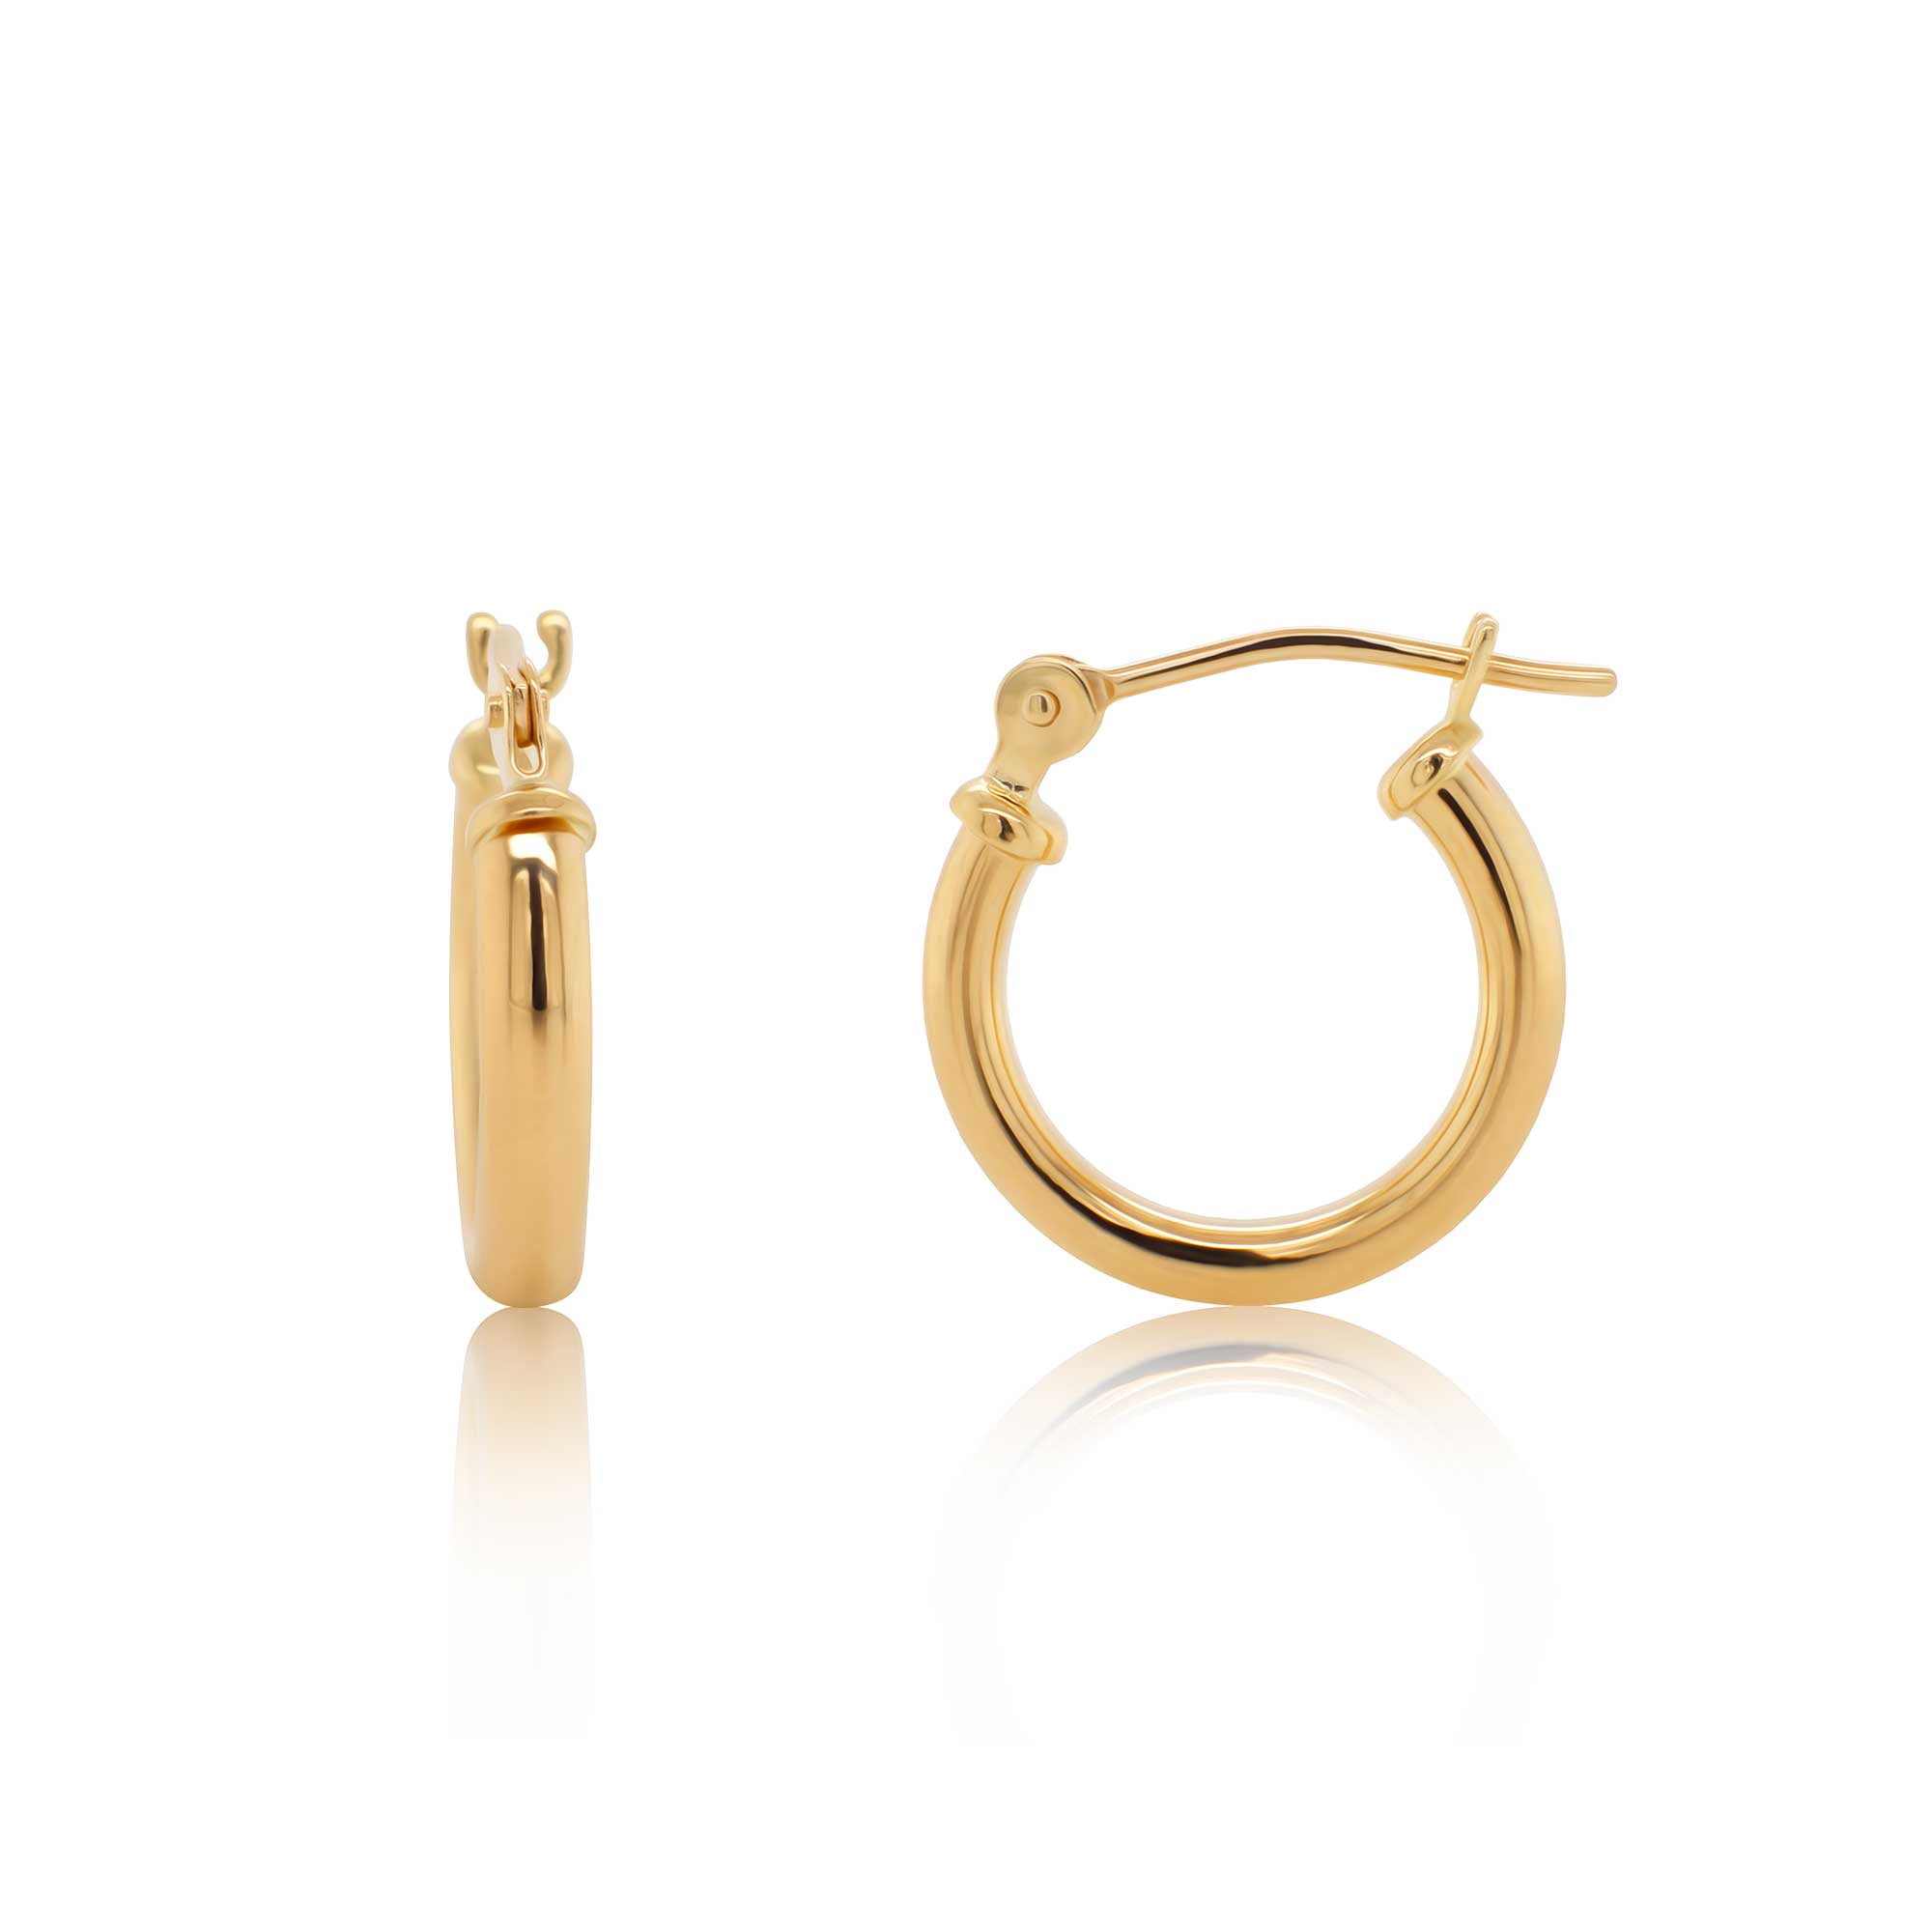 Gift for her Small hoop earrings Mini gold hoops Gold huggie earrings White gold earrings 14k gold earrings 14k white gold hoops